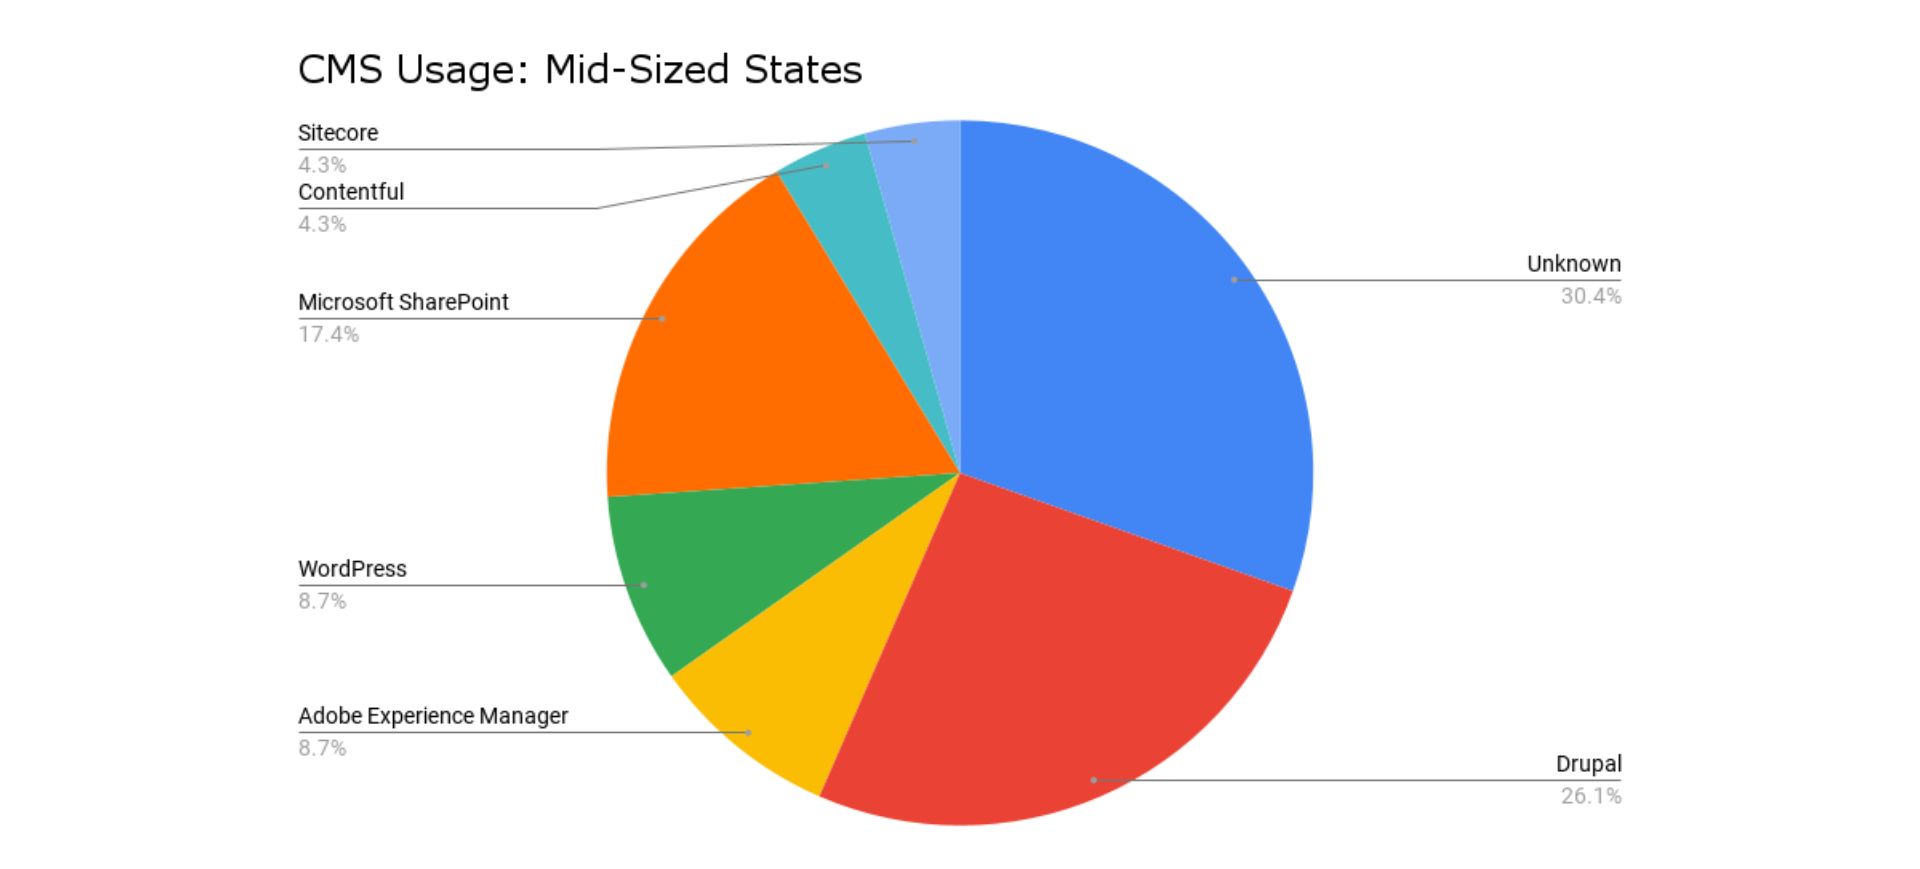 cms usage: midsized states